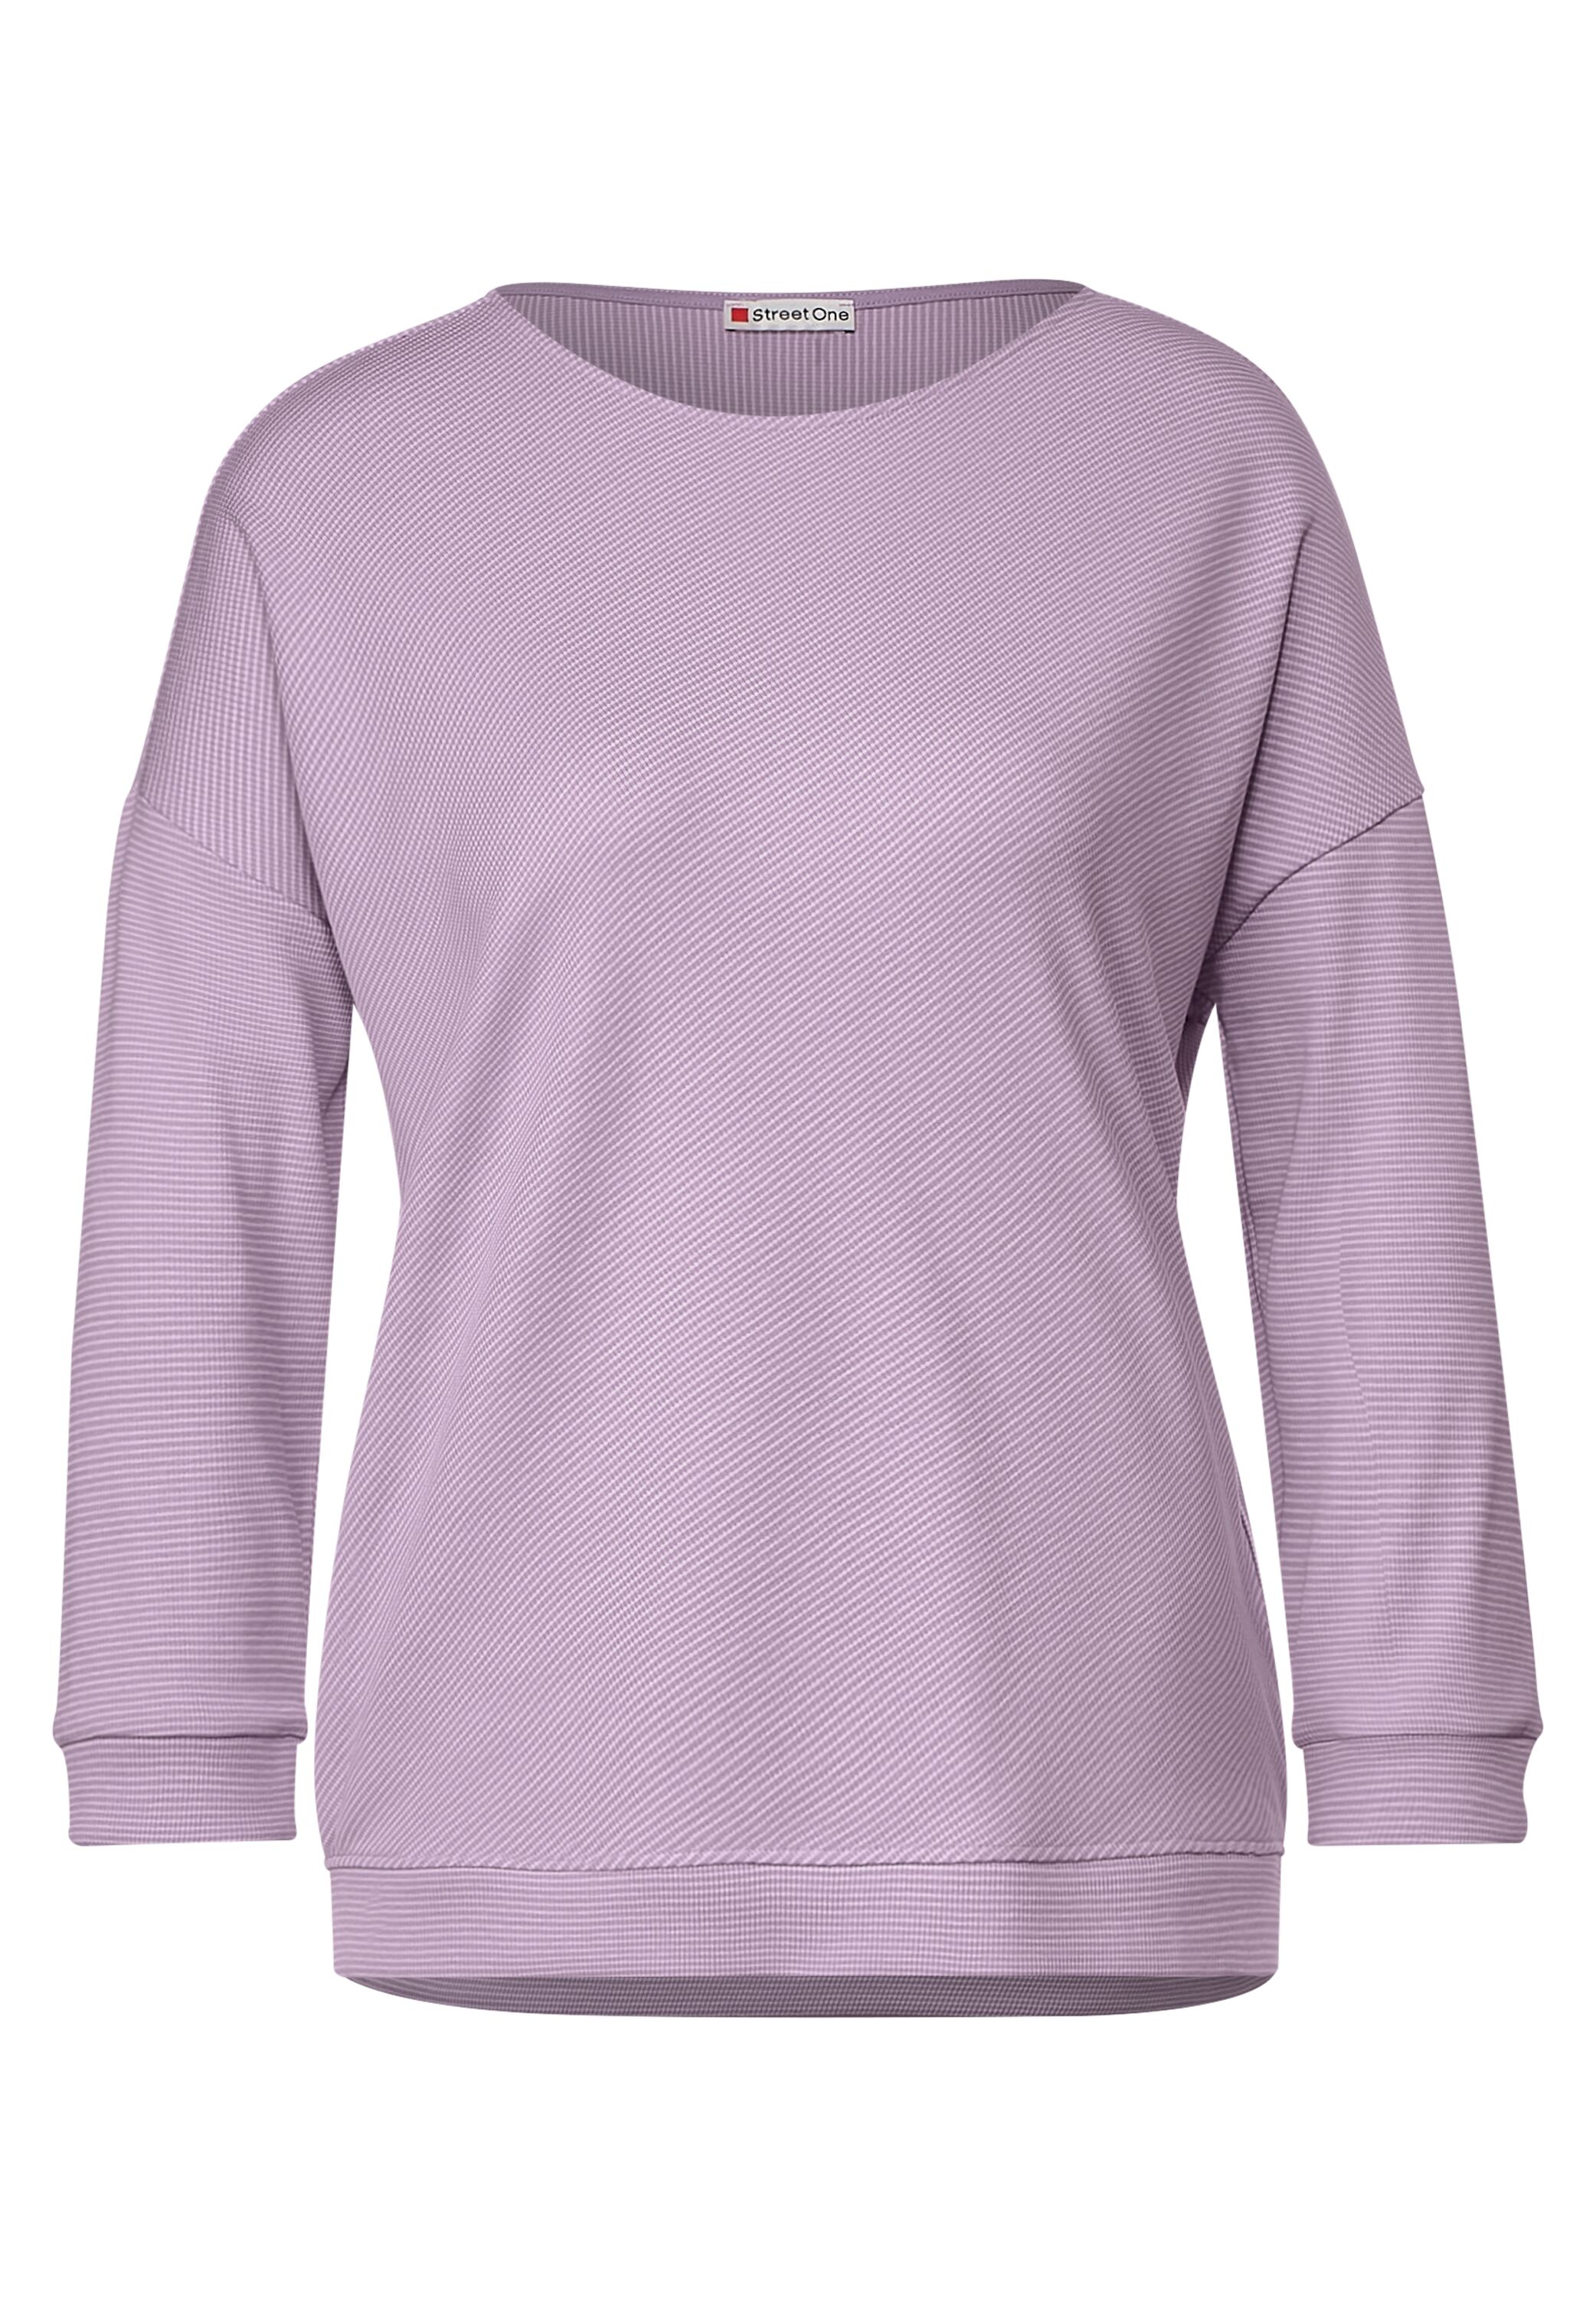 Street One Streifenshirt in Pure Lilac SALE reduziert - Mode Soft A320427-25289 im CONCEPT